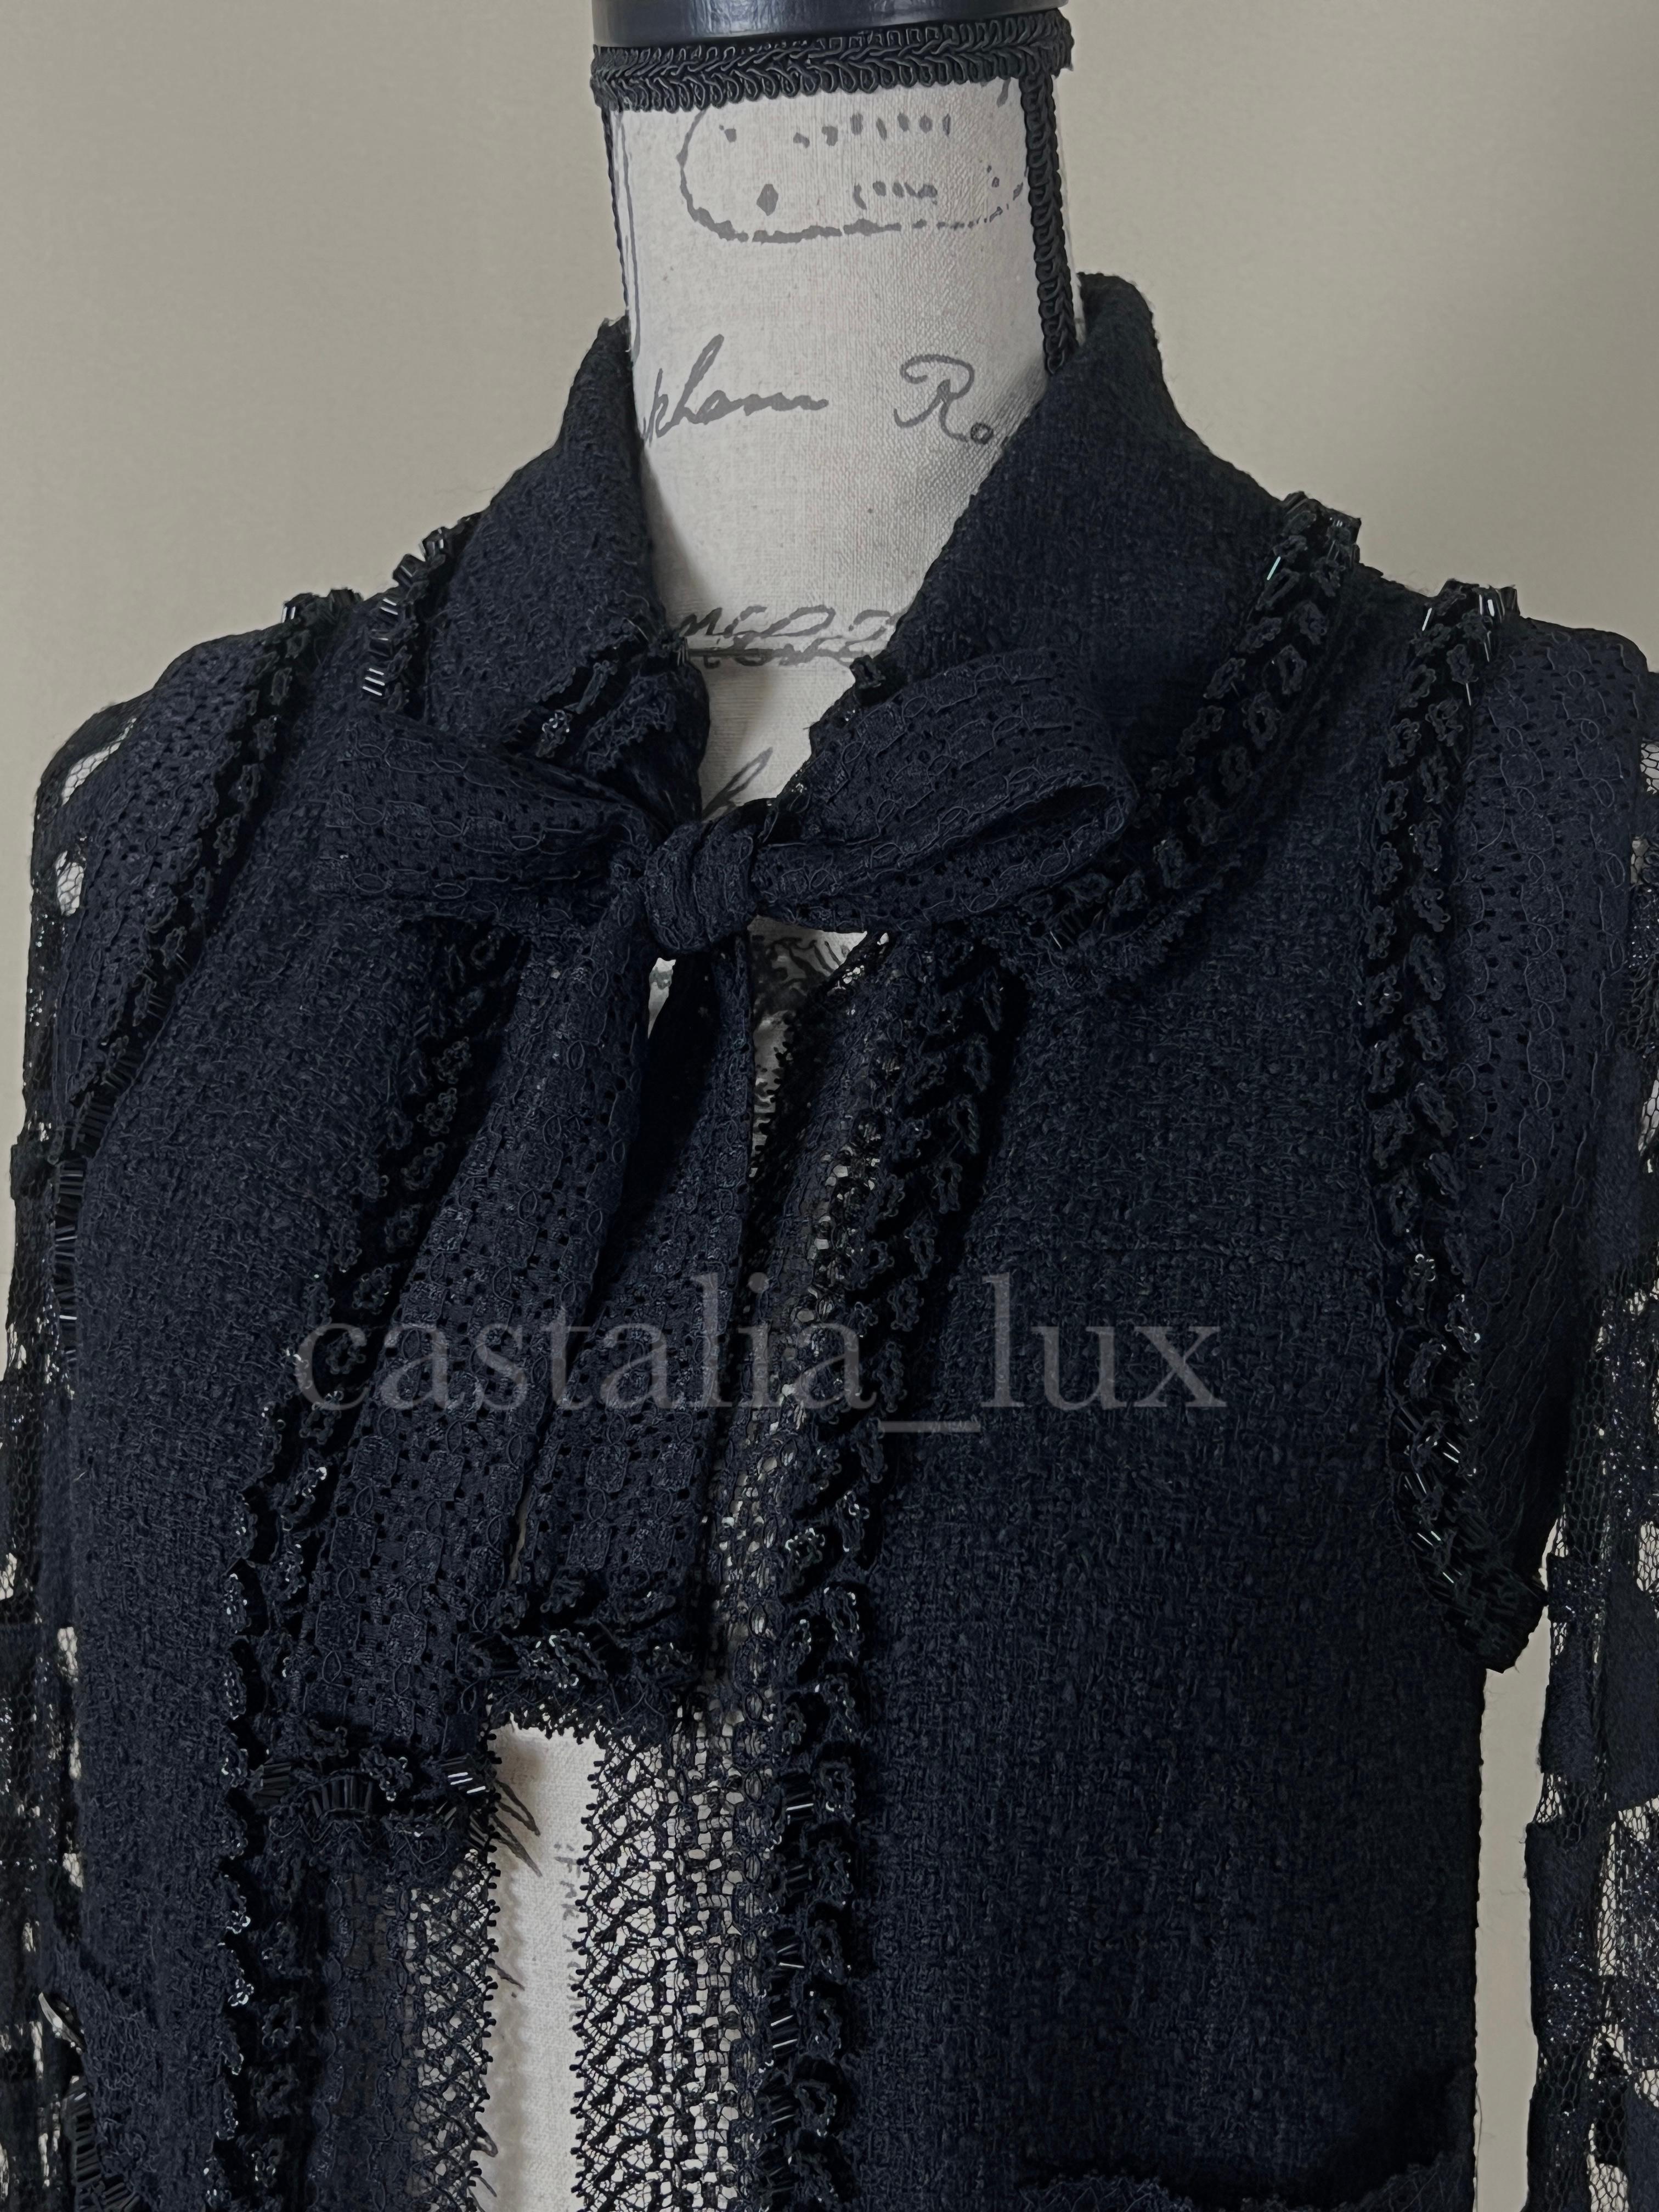 Chanel Paris / Miami CC Heart Buttons Black Tweed Jacket 4